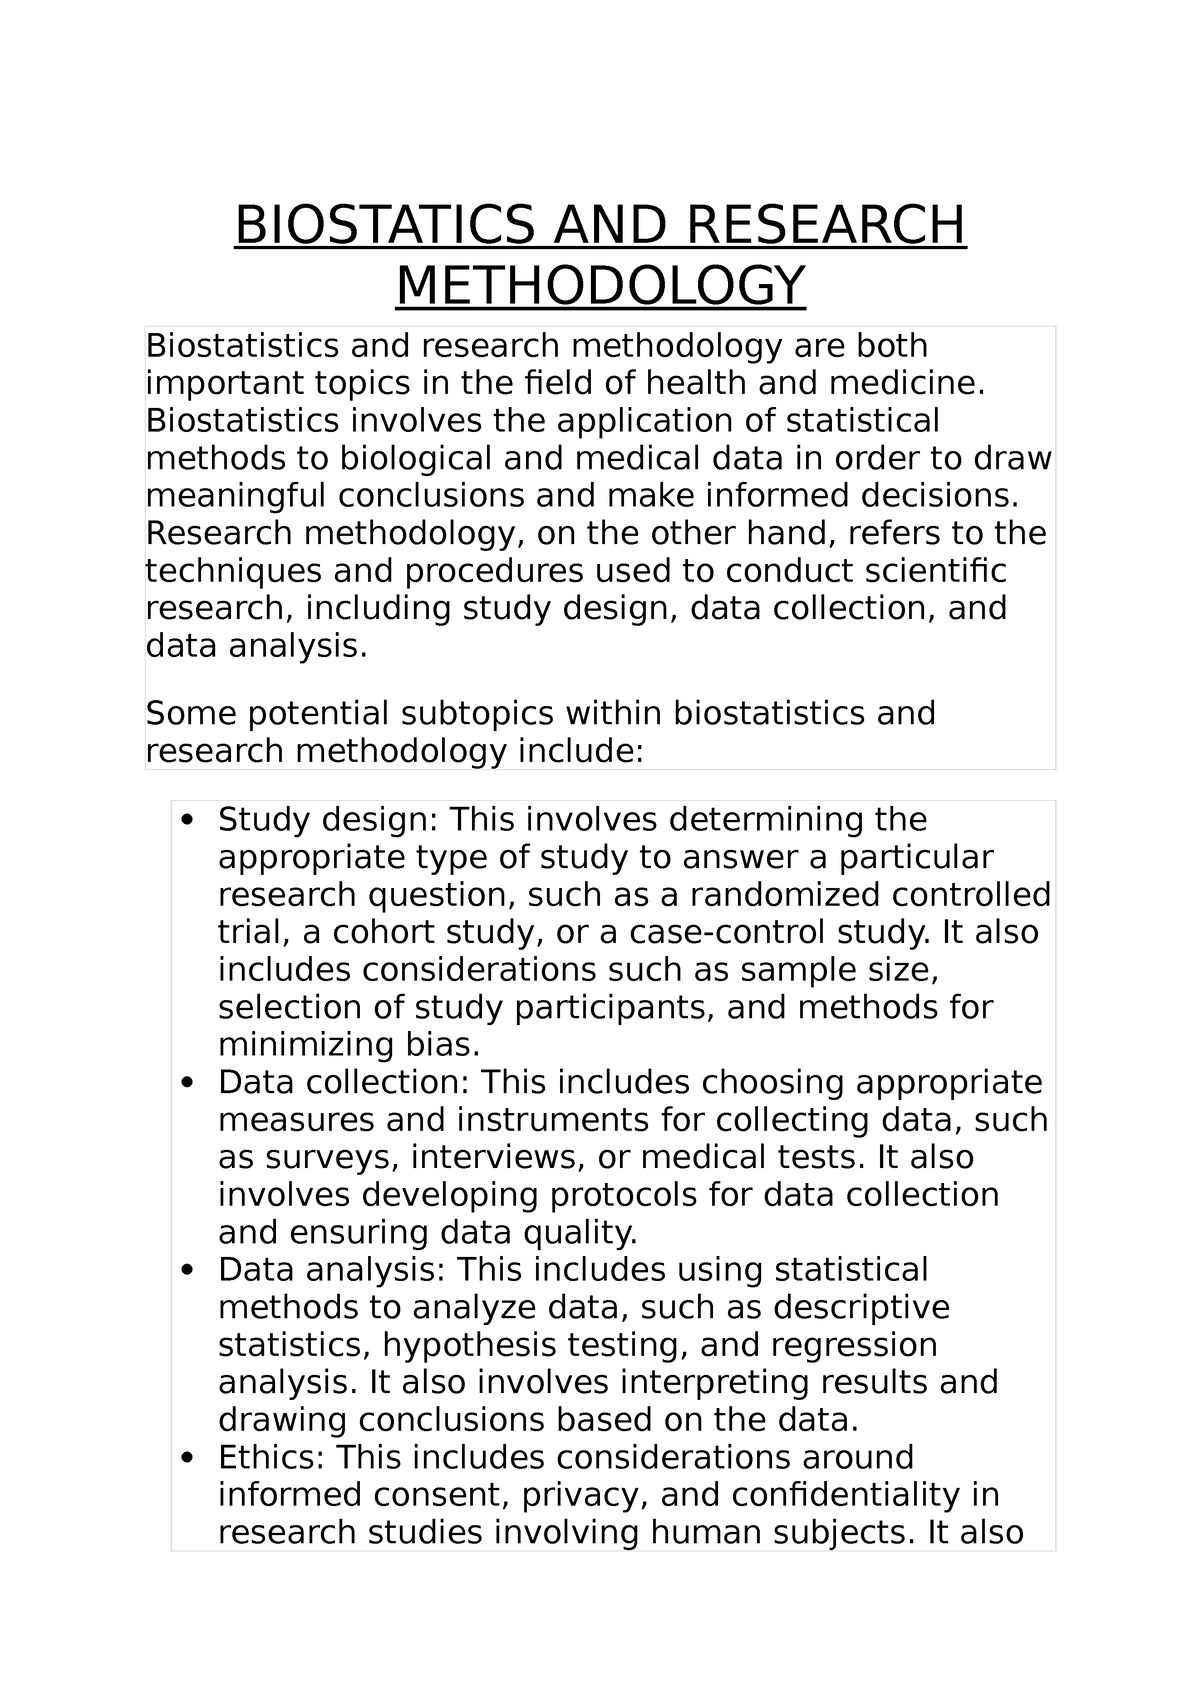 biostatistics and research methodology unit 5 slideshare